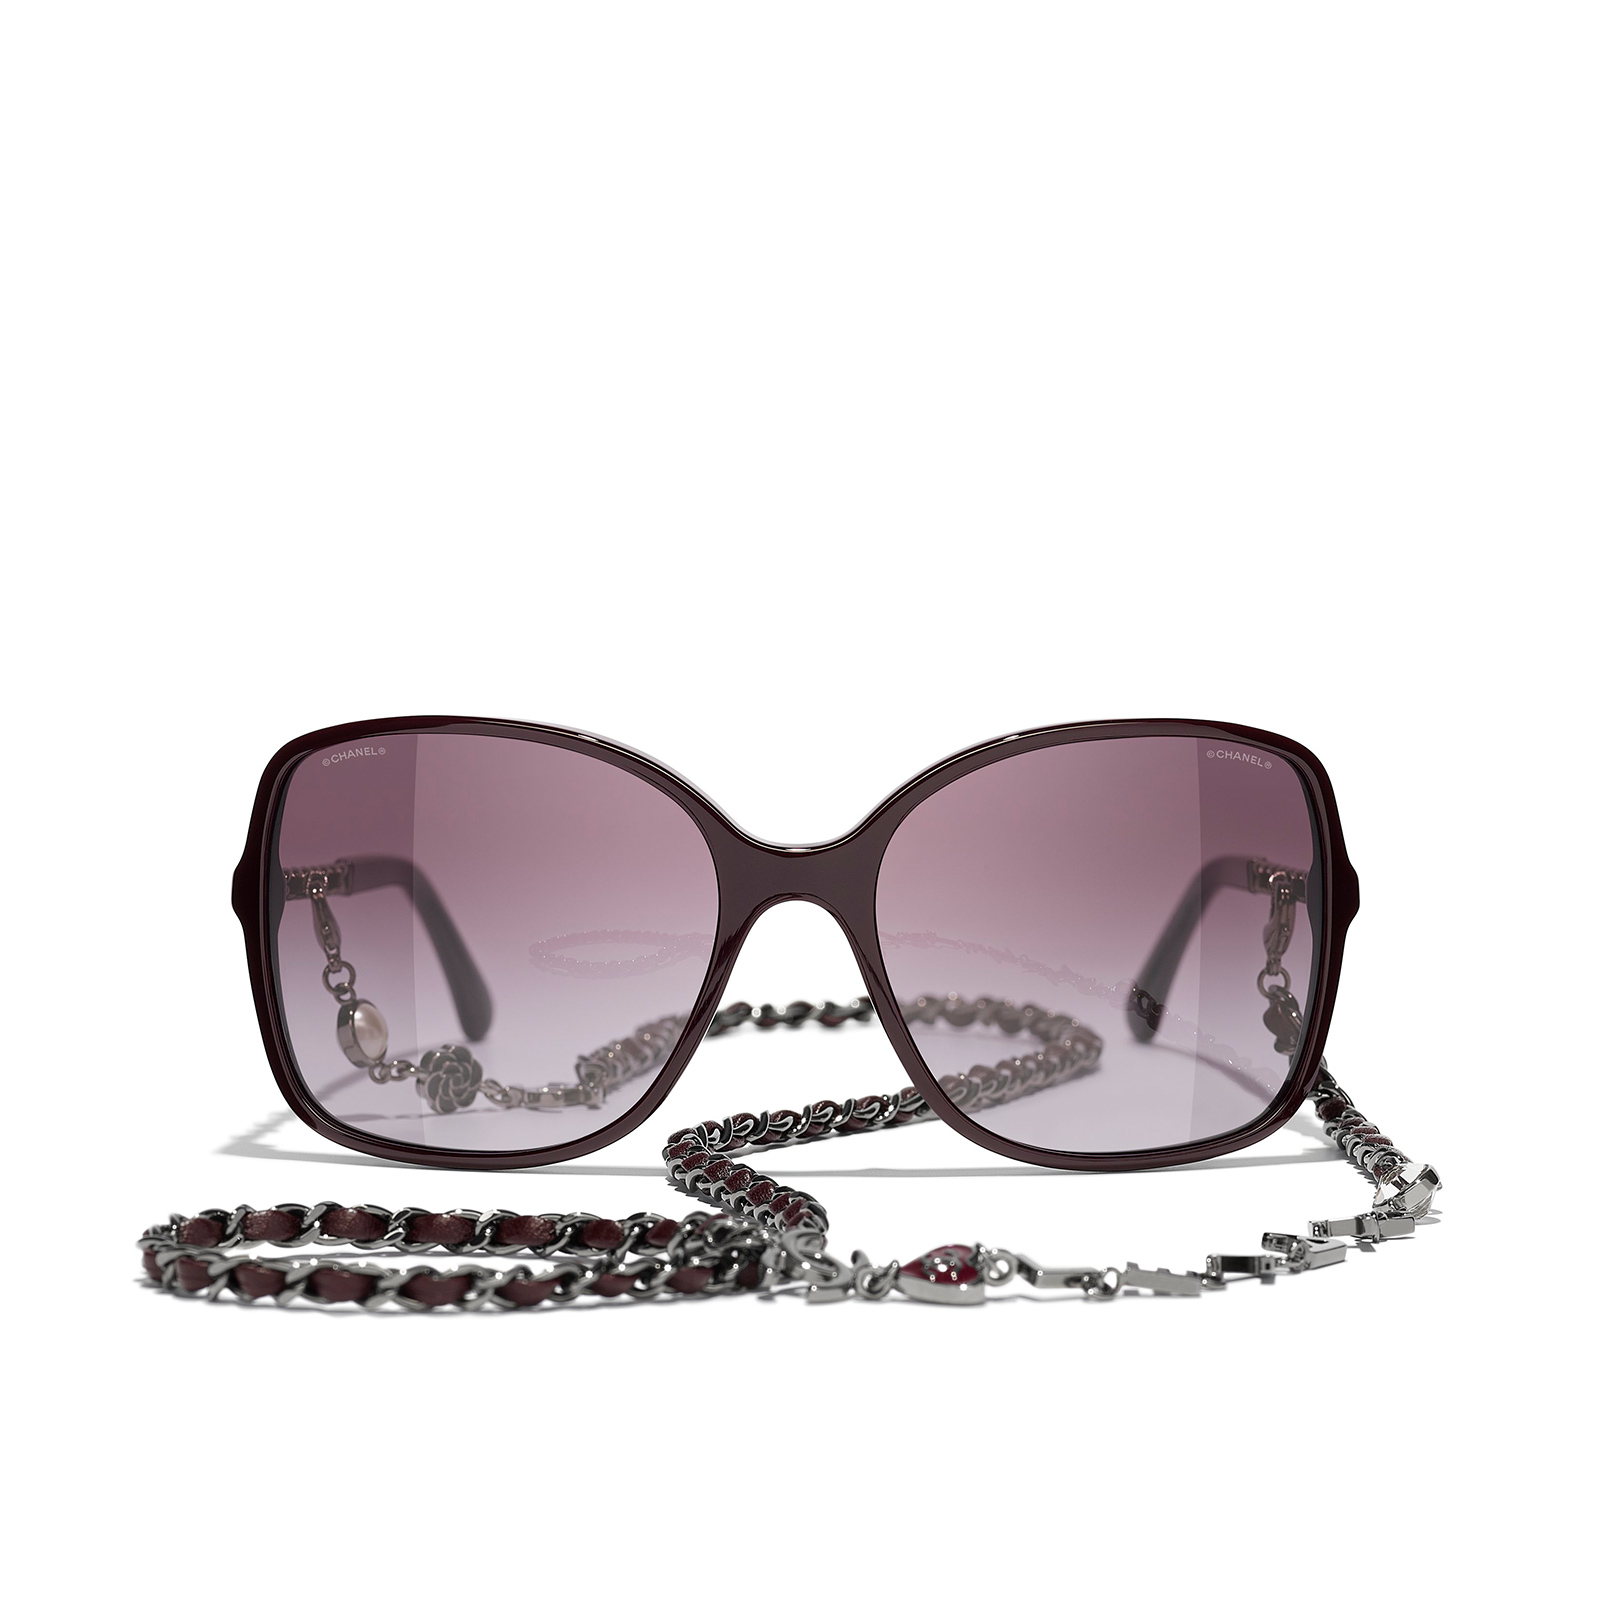 CHANEL square Sunglasses 1461S1 Burgundy & Dark Silver - front view